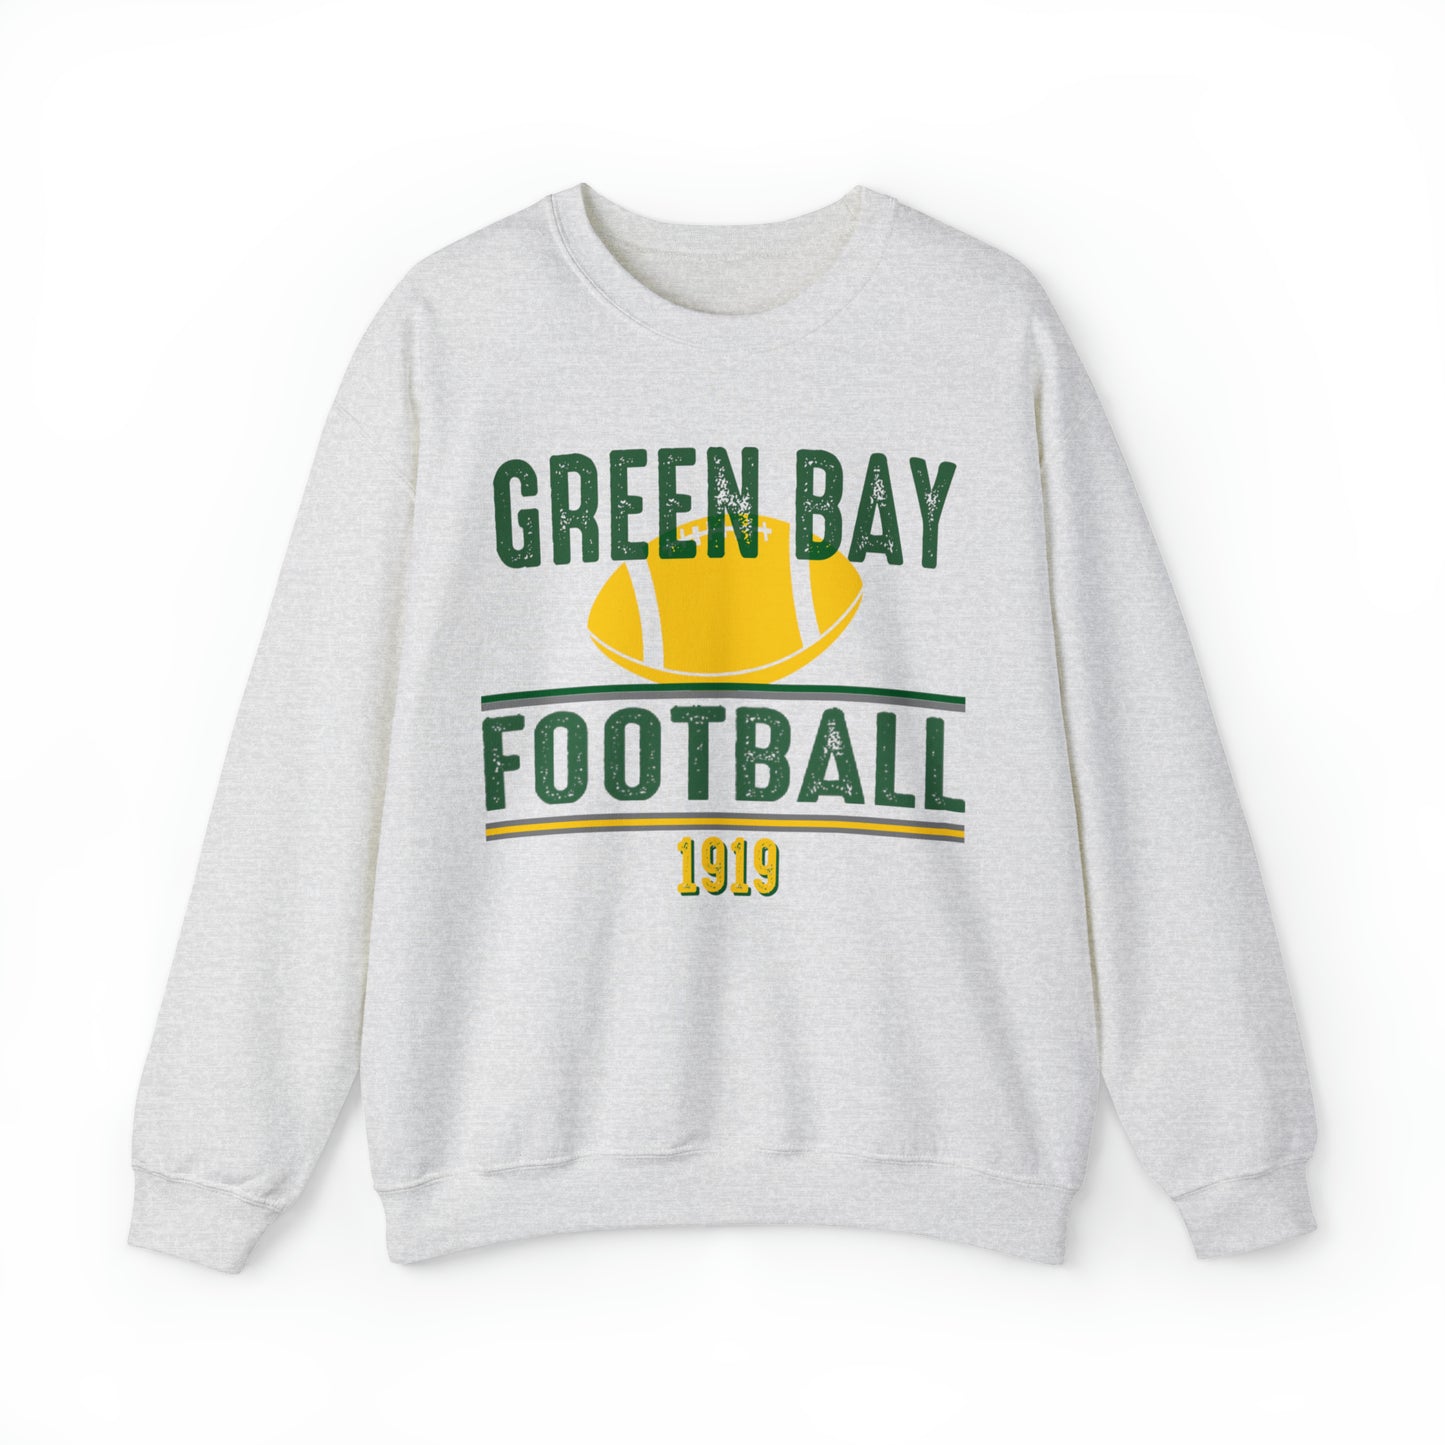 Green Bay Packers Football Sweatshirt